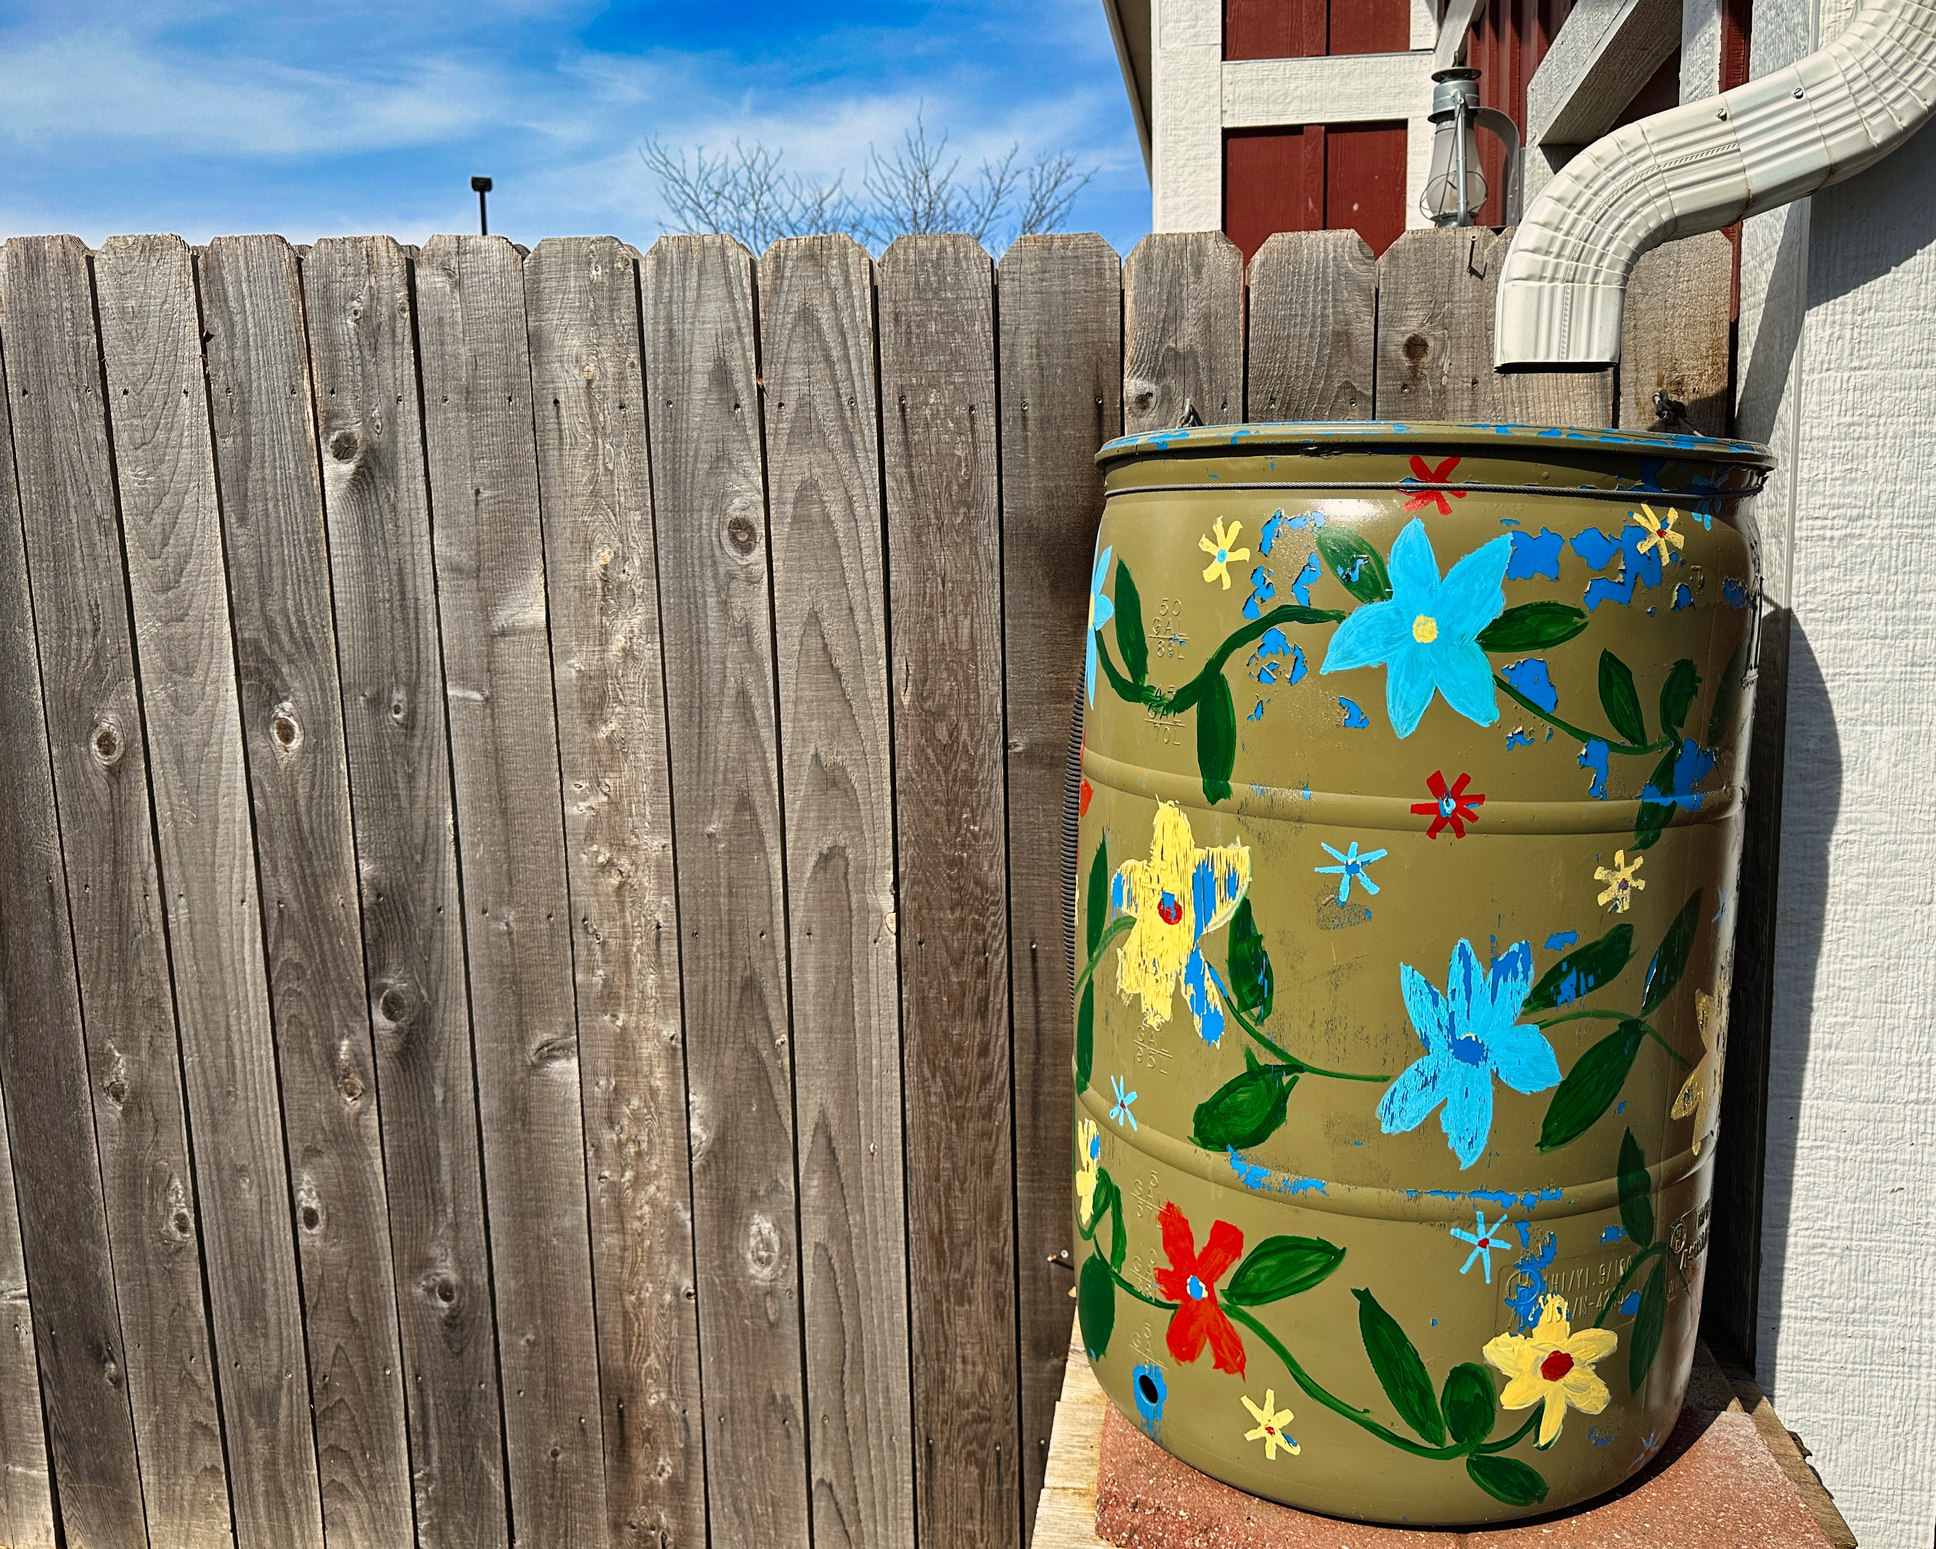 Painted Flowers on Green Rain Barrel by Wood Fence (Photo: iStock - Matthew Fowler)